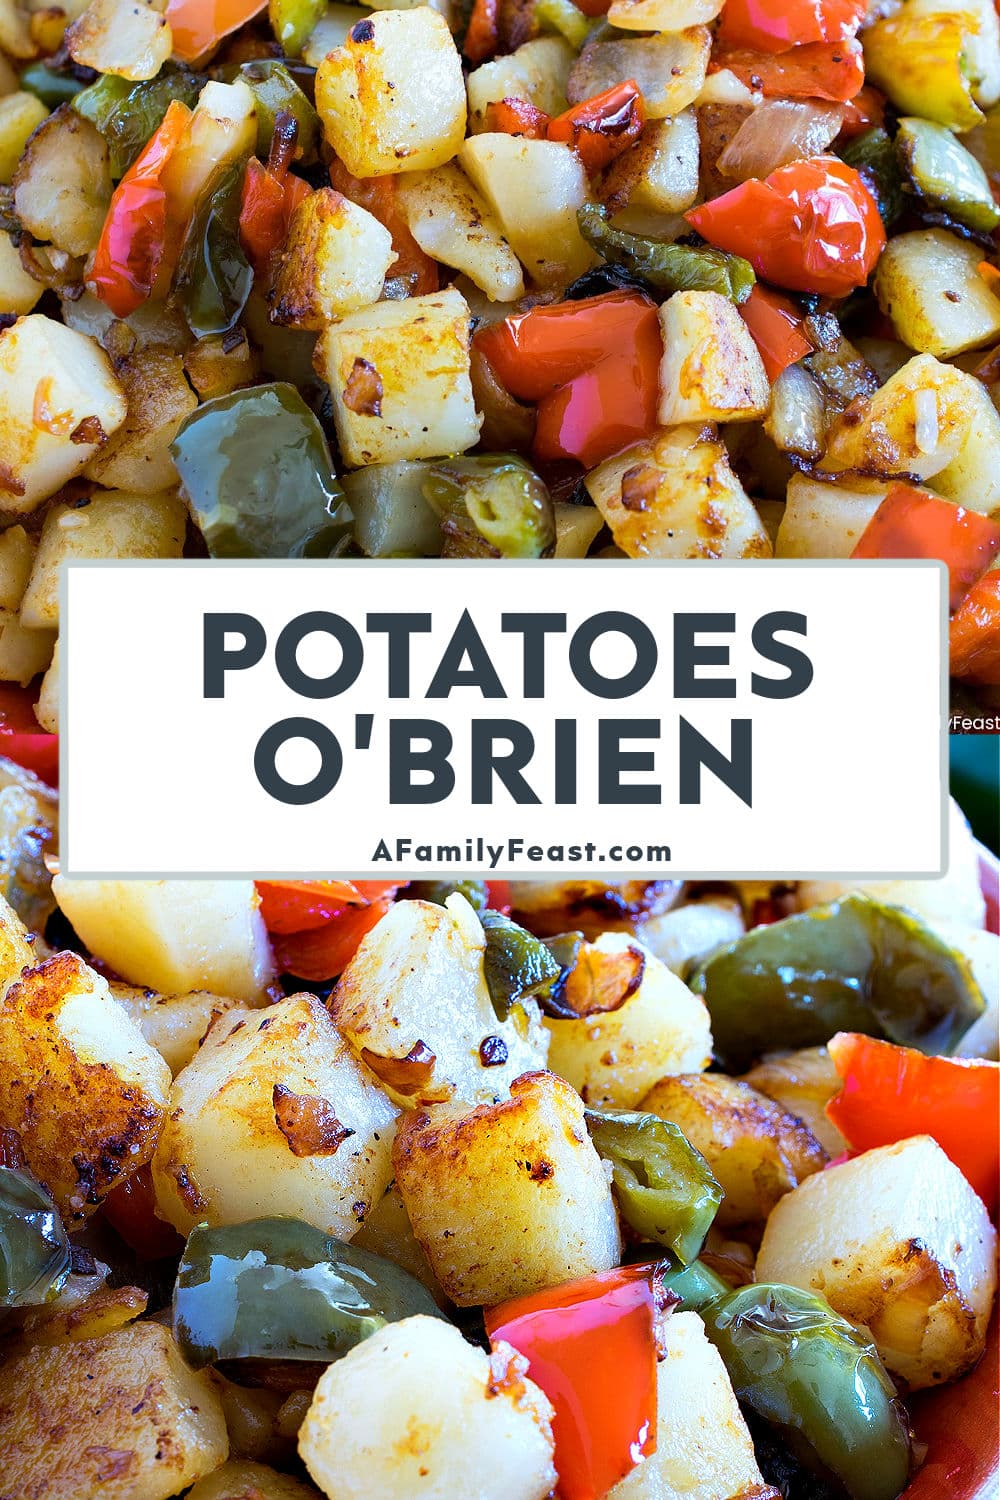 Potatoes O'Brien - A Family Feast